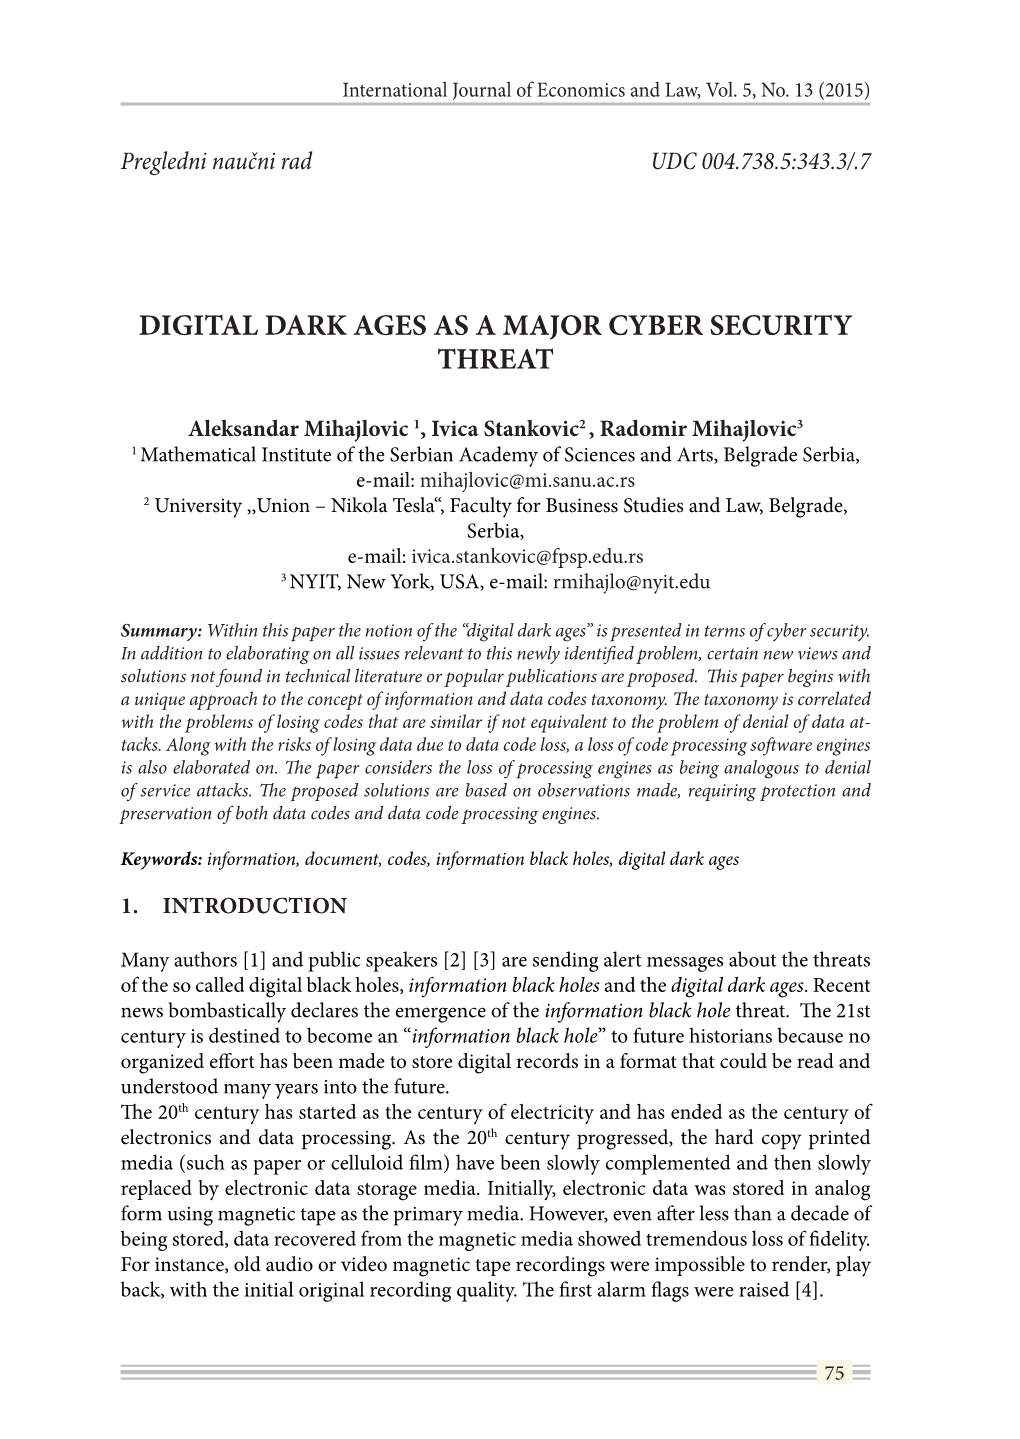 Digital Dark Ages As a Major Cyber Security Threat